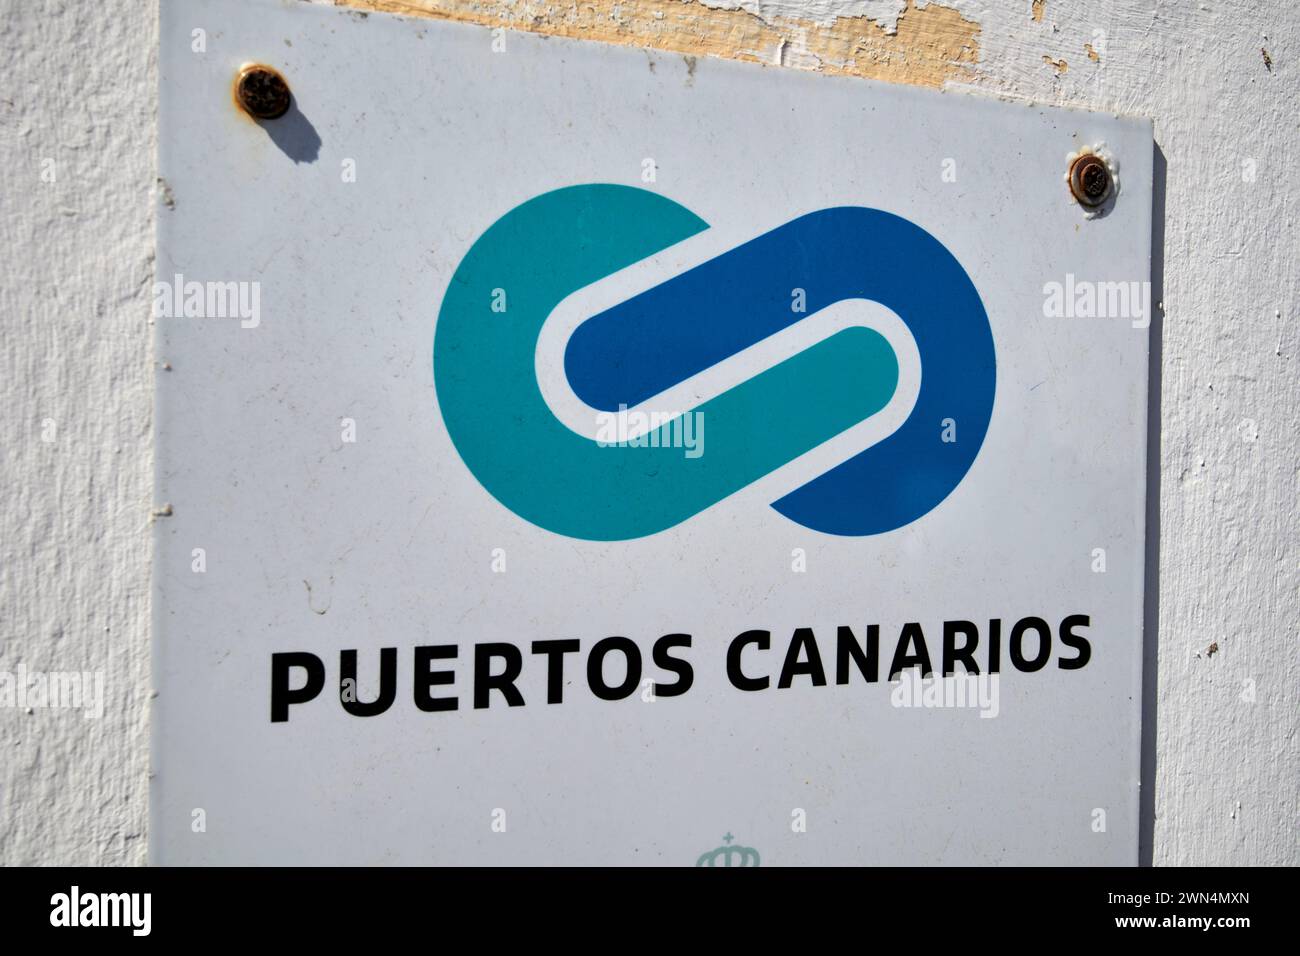 puertos canarios logo and sign in the port of Corralejo, fuerteventura, Canary Islands, spain Stock Photo